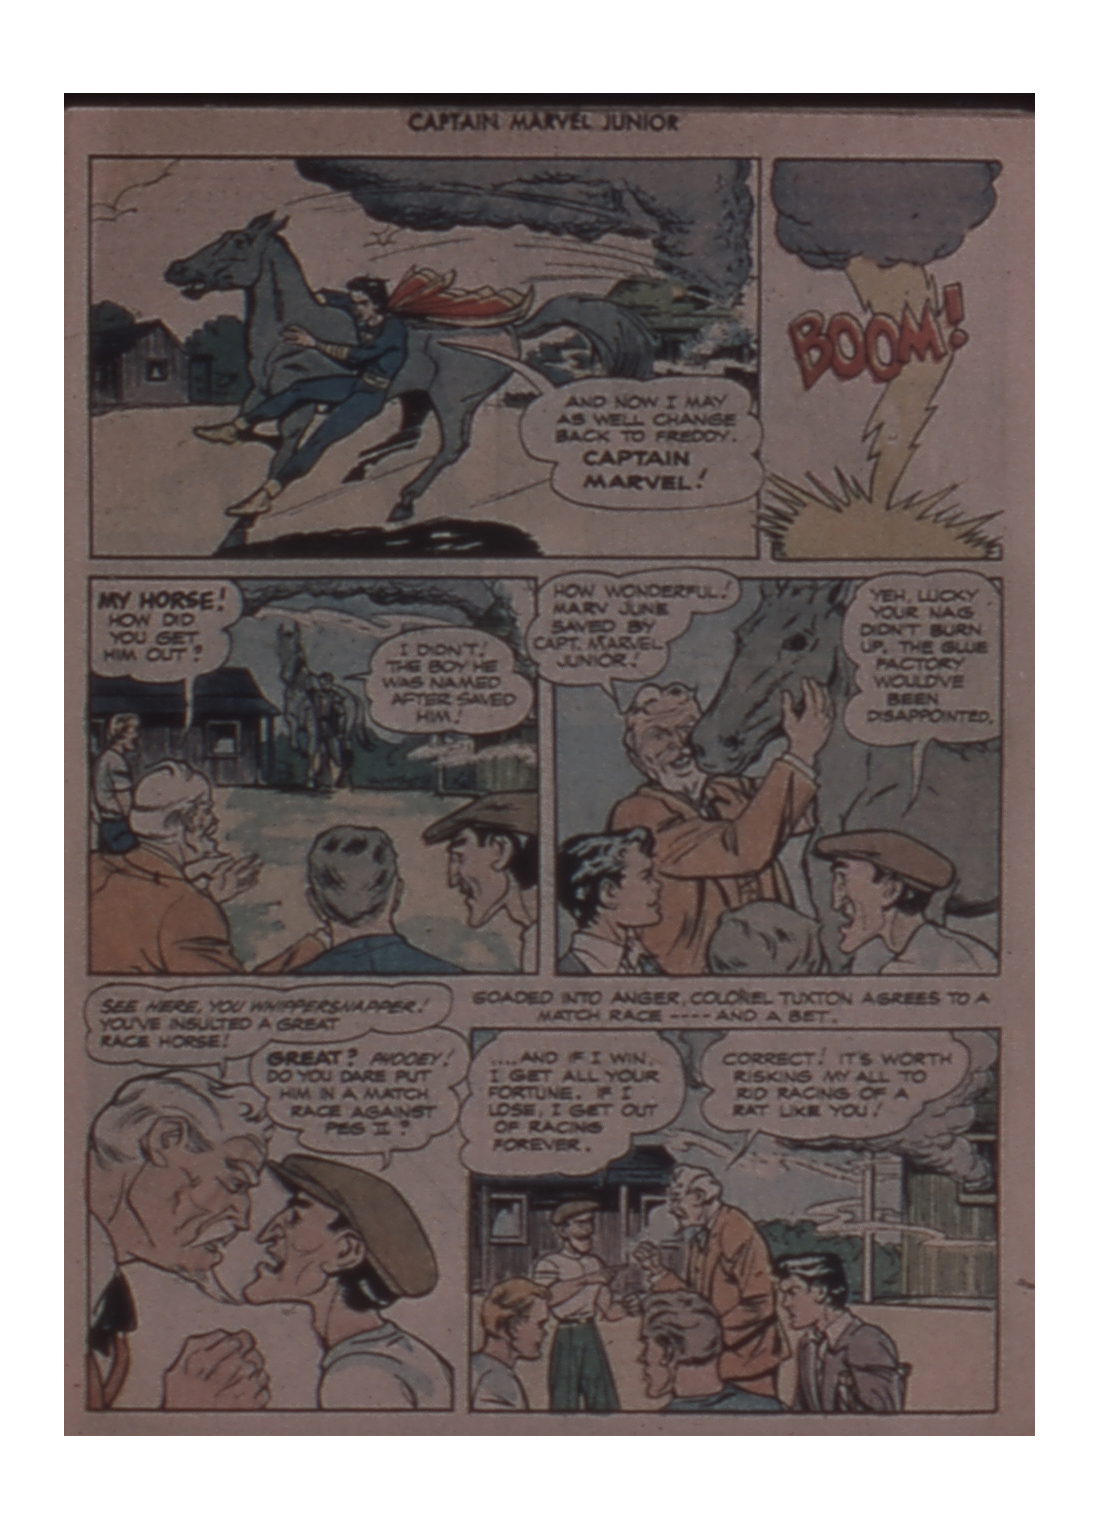 Read online Captain Marvel, Jr. comic -  Issue #58 - 9